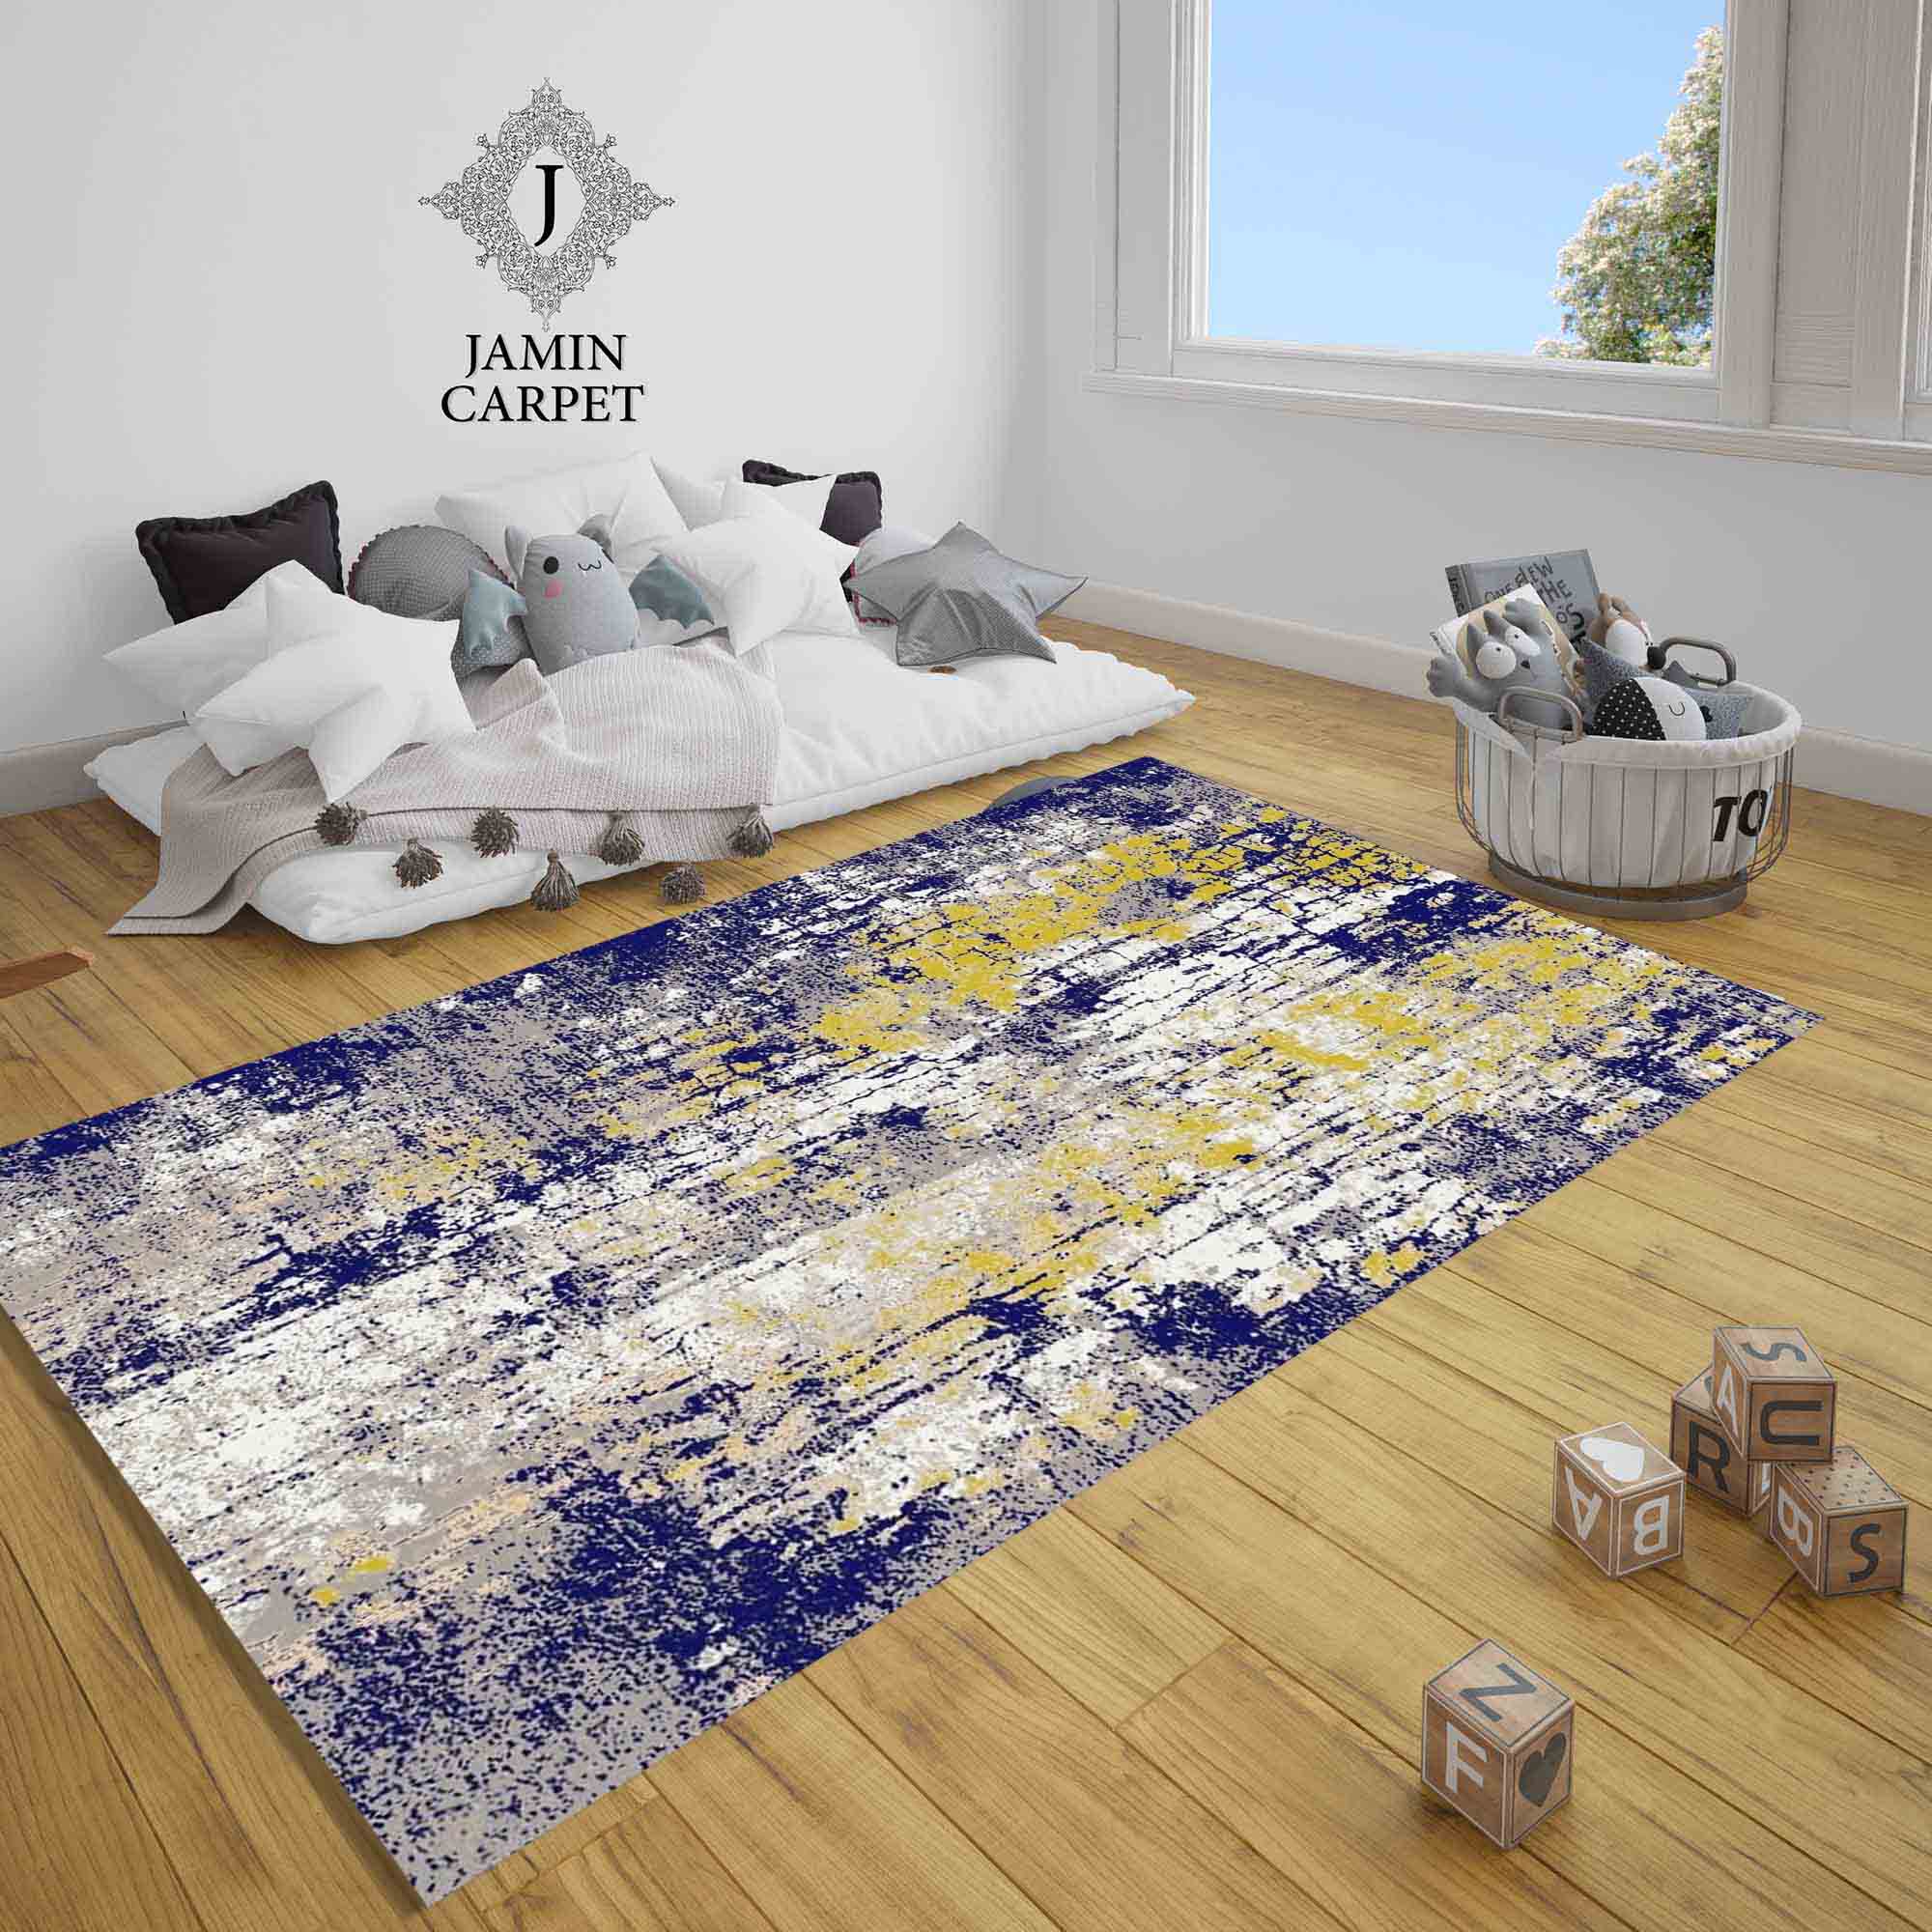 Fantasy carpet, code 246, comb 400, density 1800, all acrylic